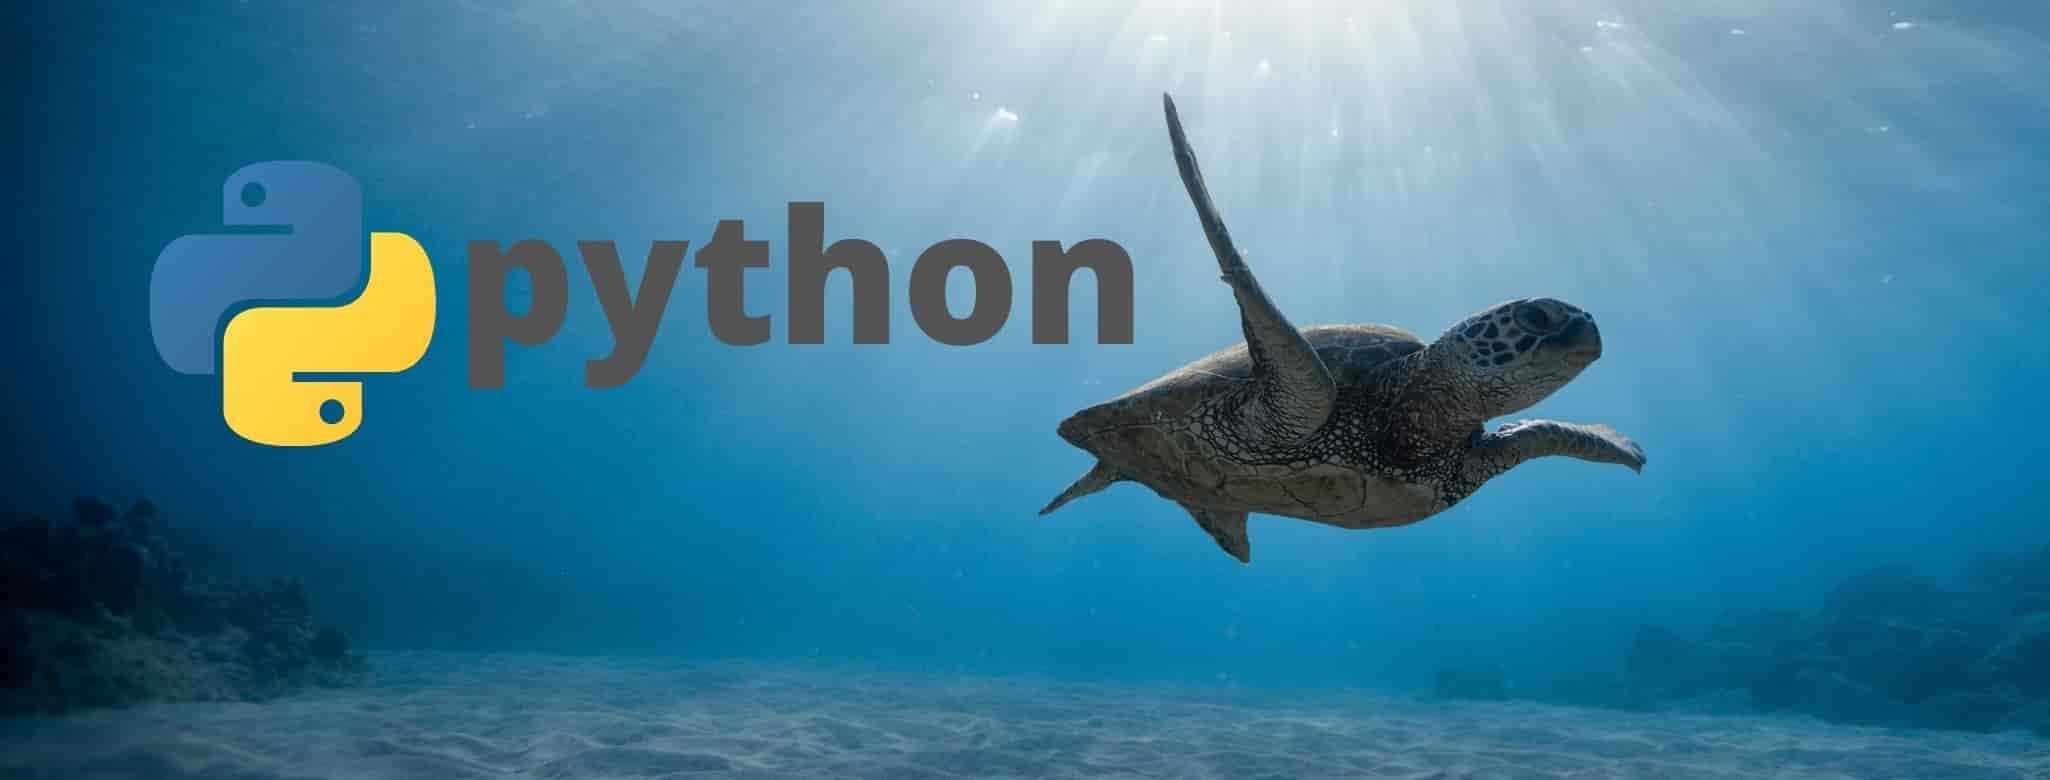 python2-min-min.jpeg